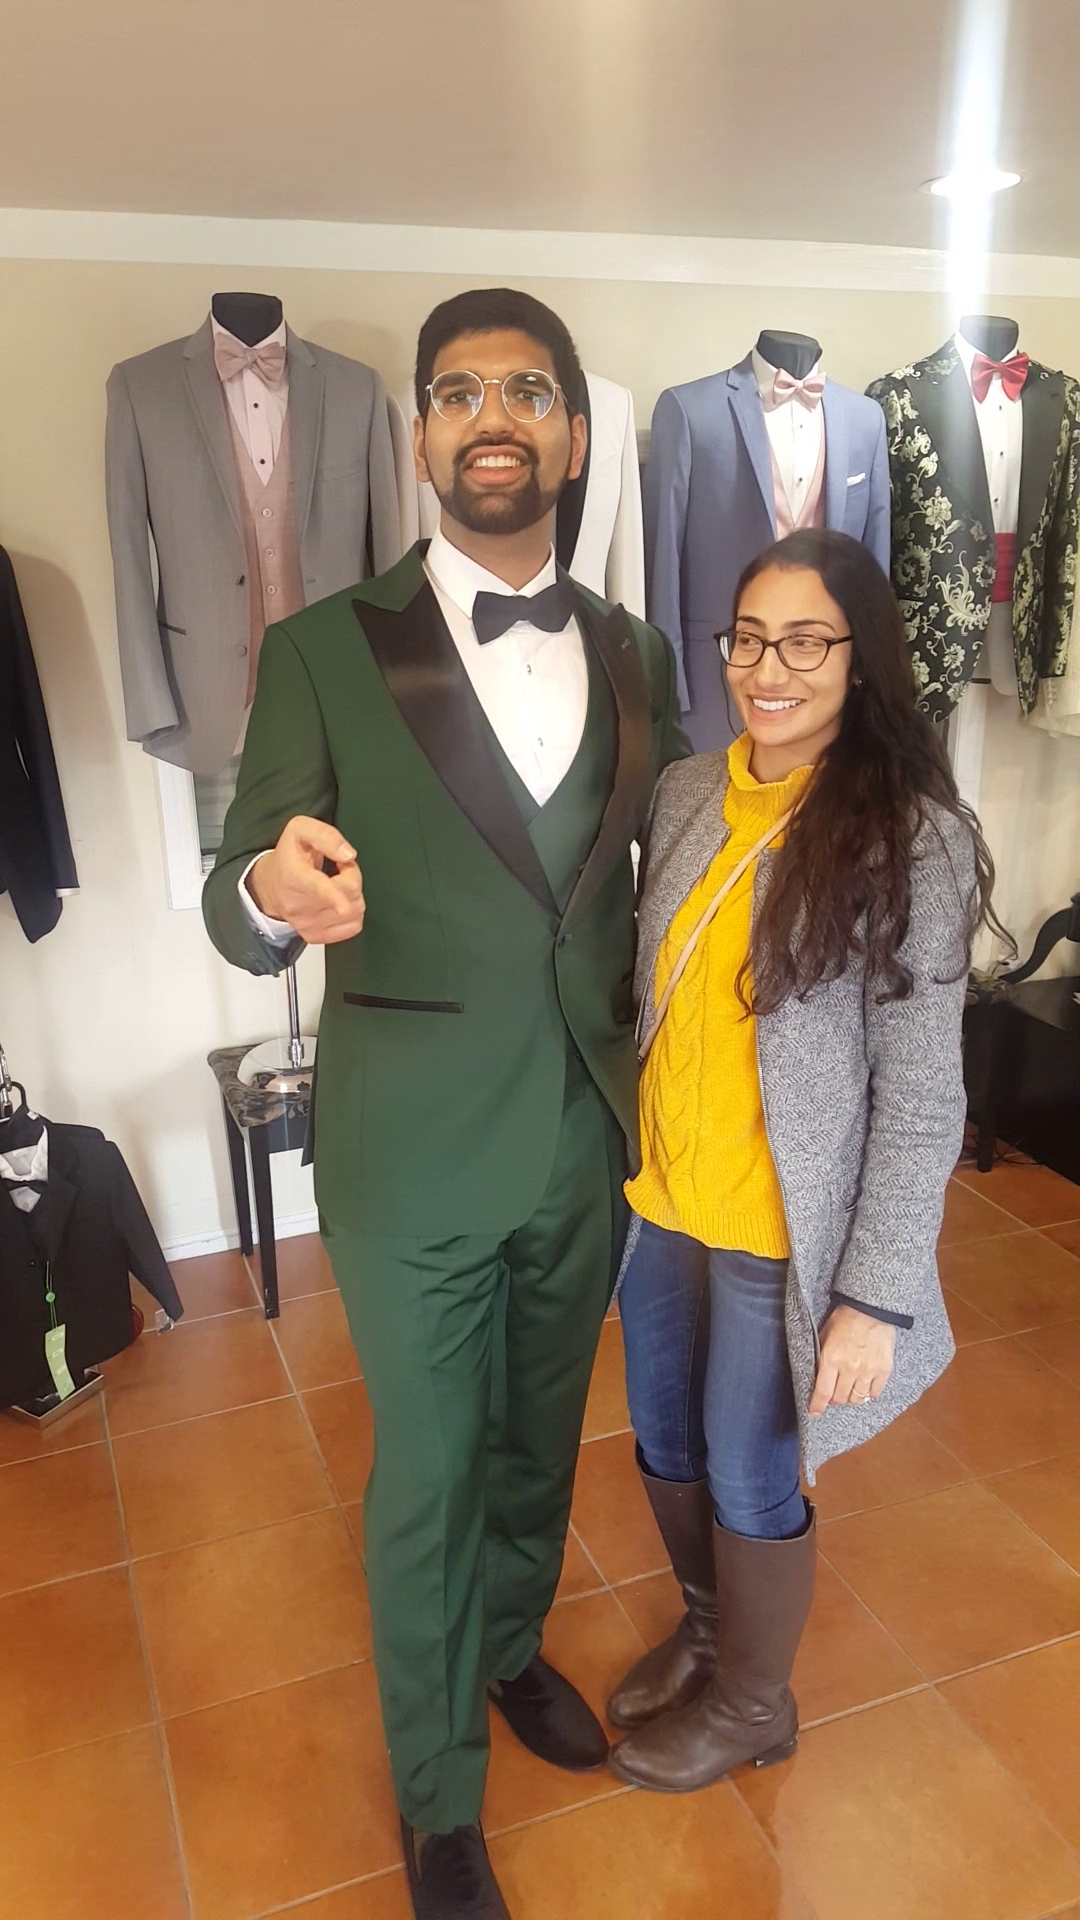 Tuxedo by Sarno Menswear & Suits